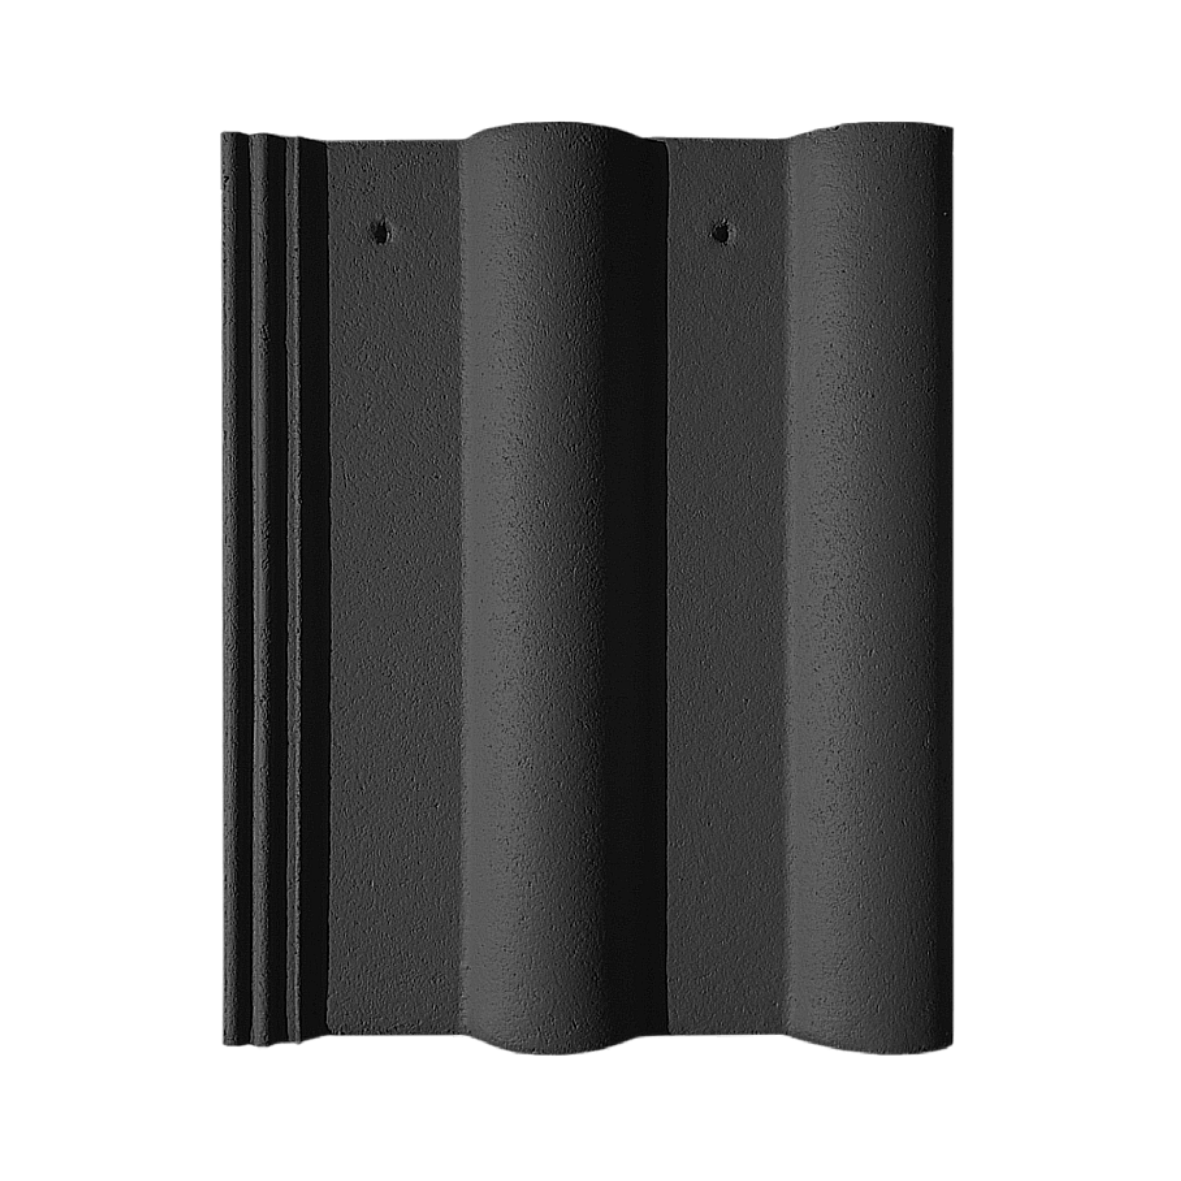 Tigla beton si accesorii - Tigla de beton Nova Double Roman negru 420 x 330 mm, https:maxbau.ro